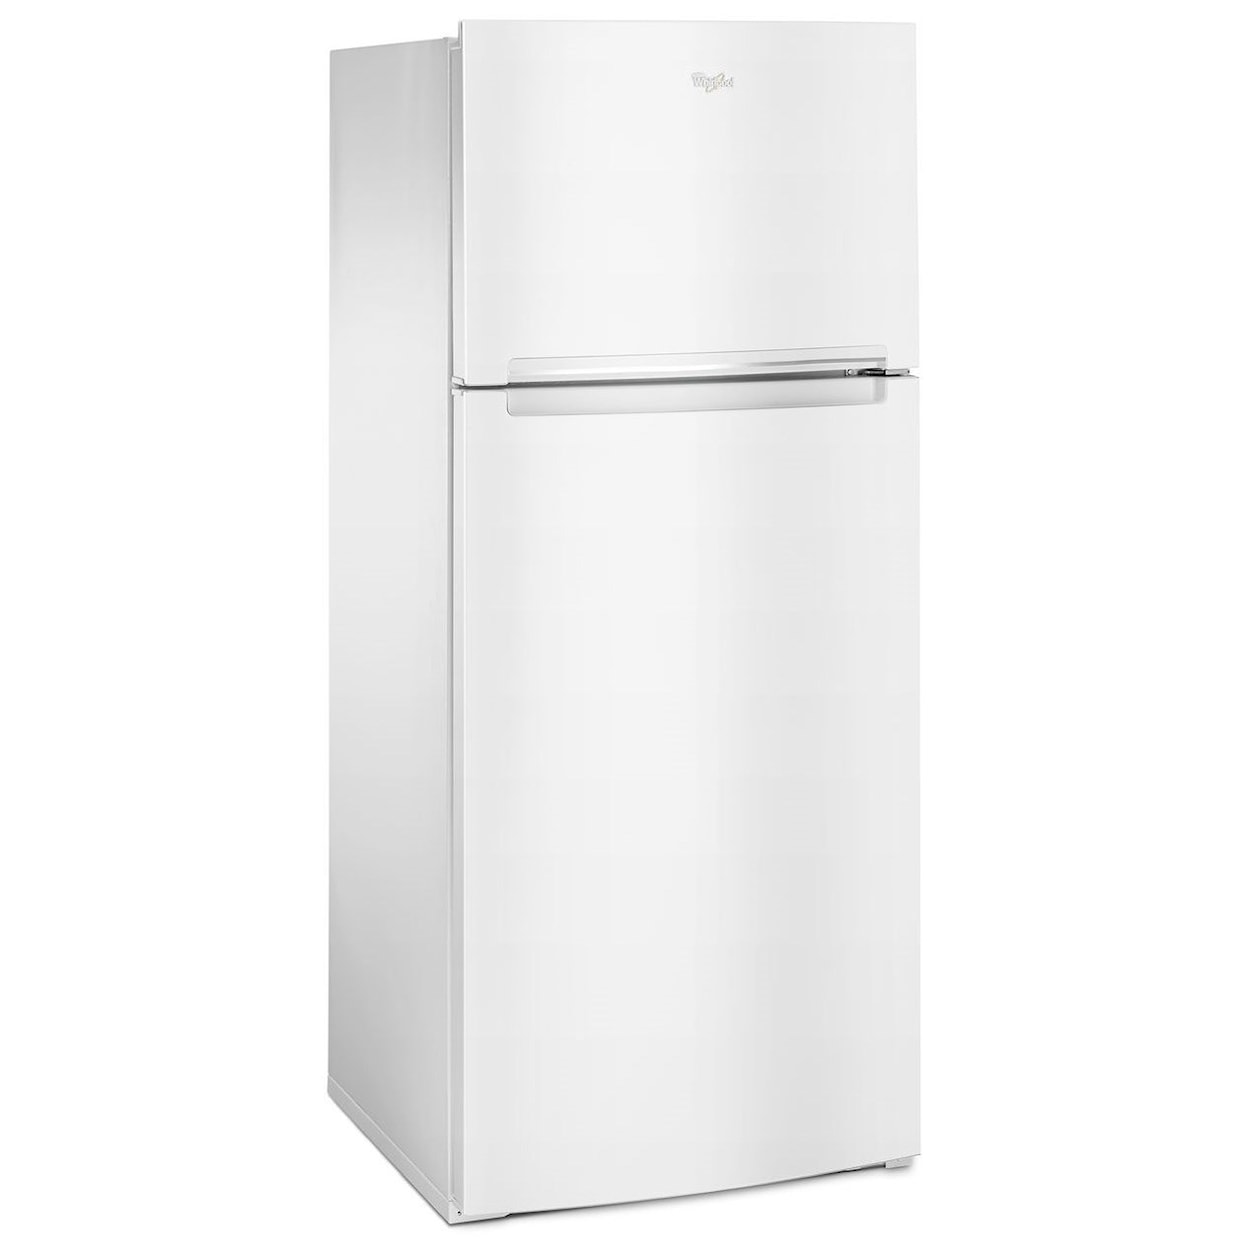 Whirlpool Top Mount Refrigerators 28-inch Wide Whirlpool® Refrigerator